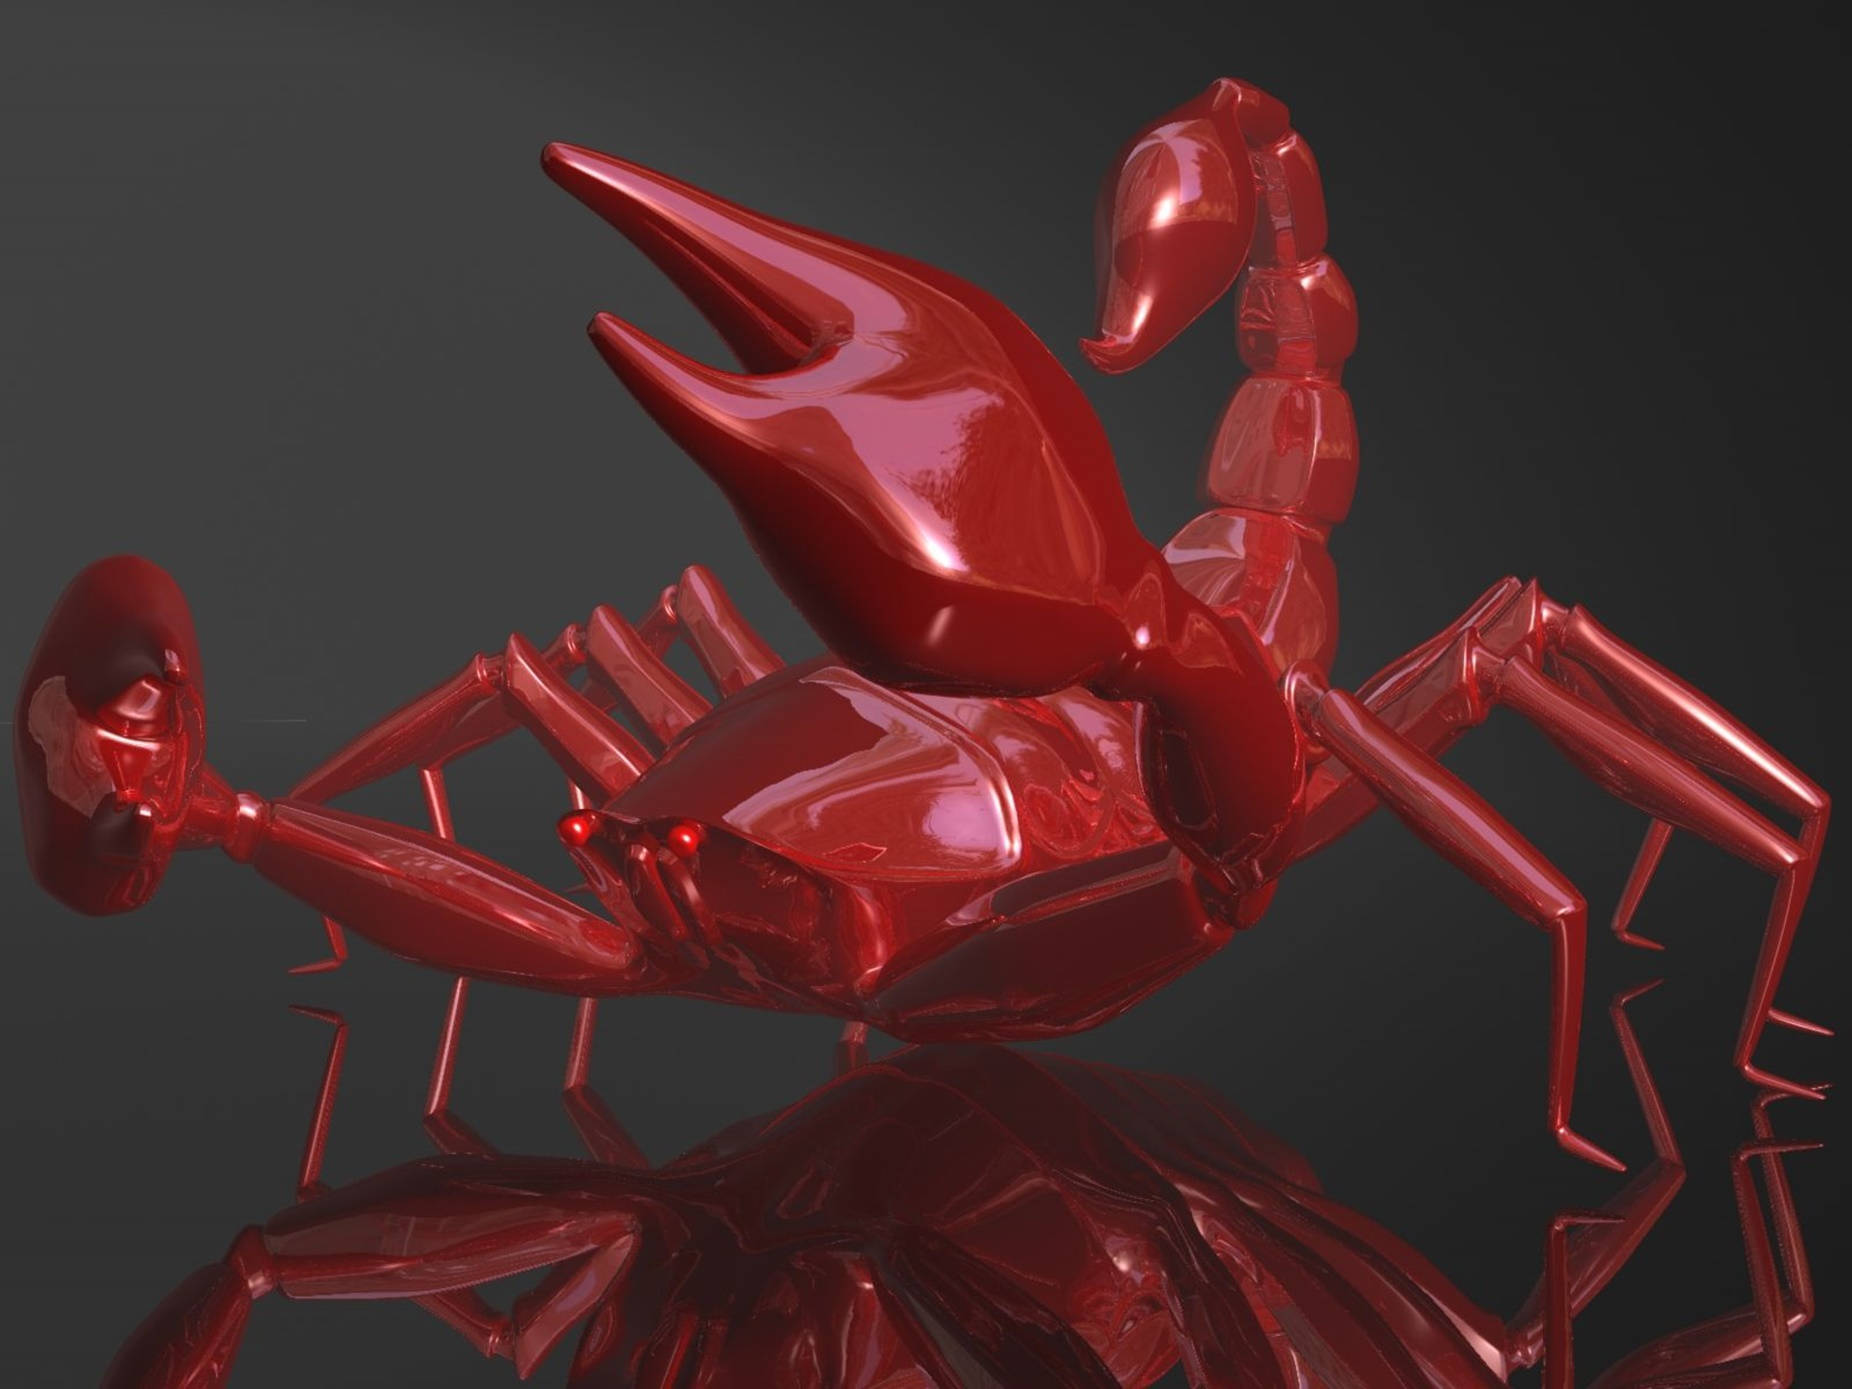 Scorpion Red 3D Render On Black Wallpaper